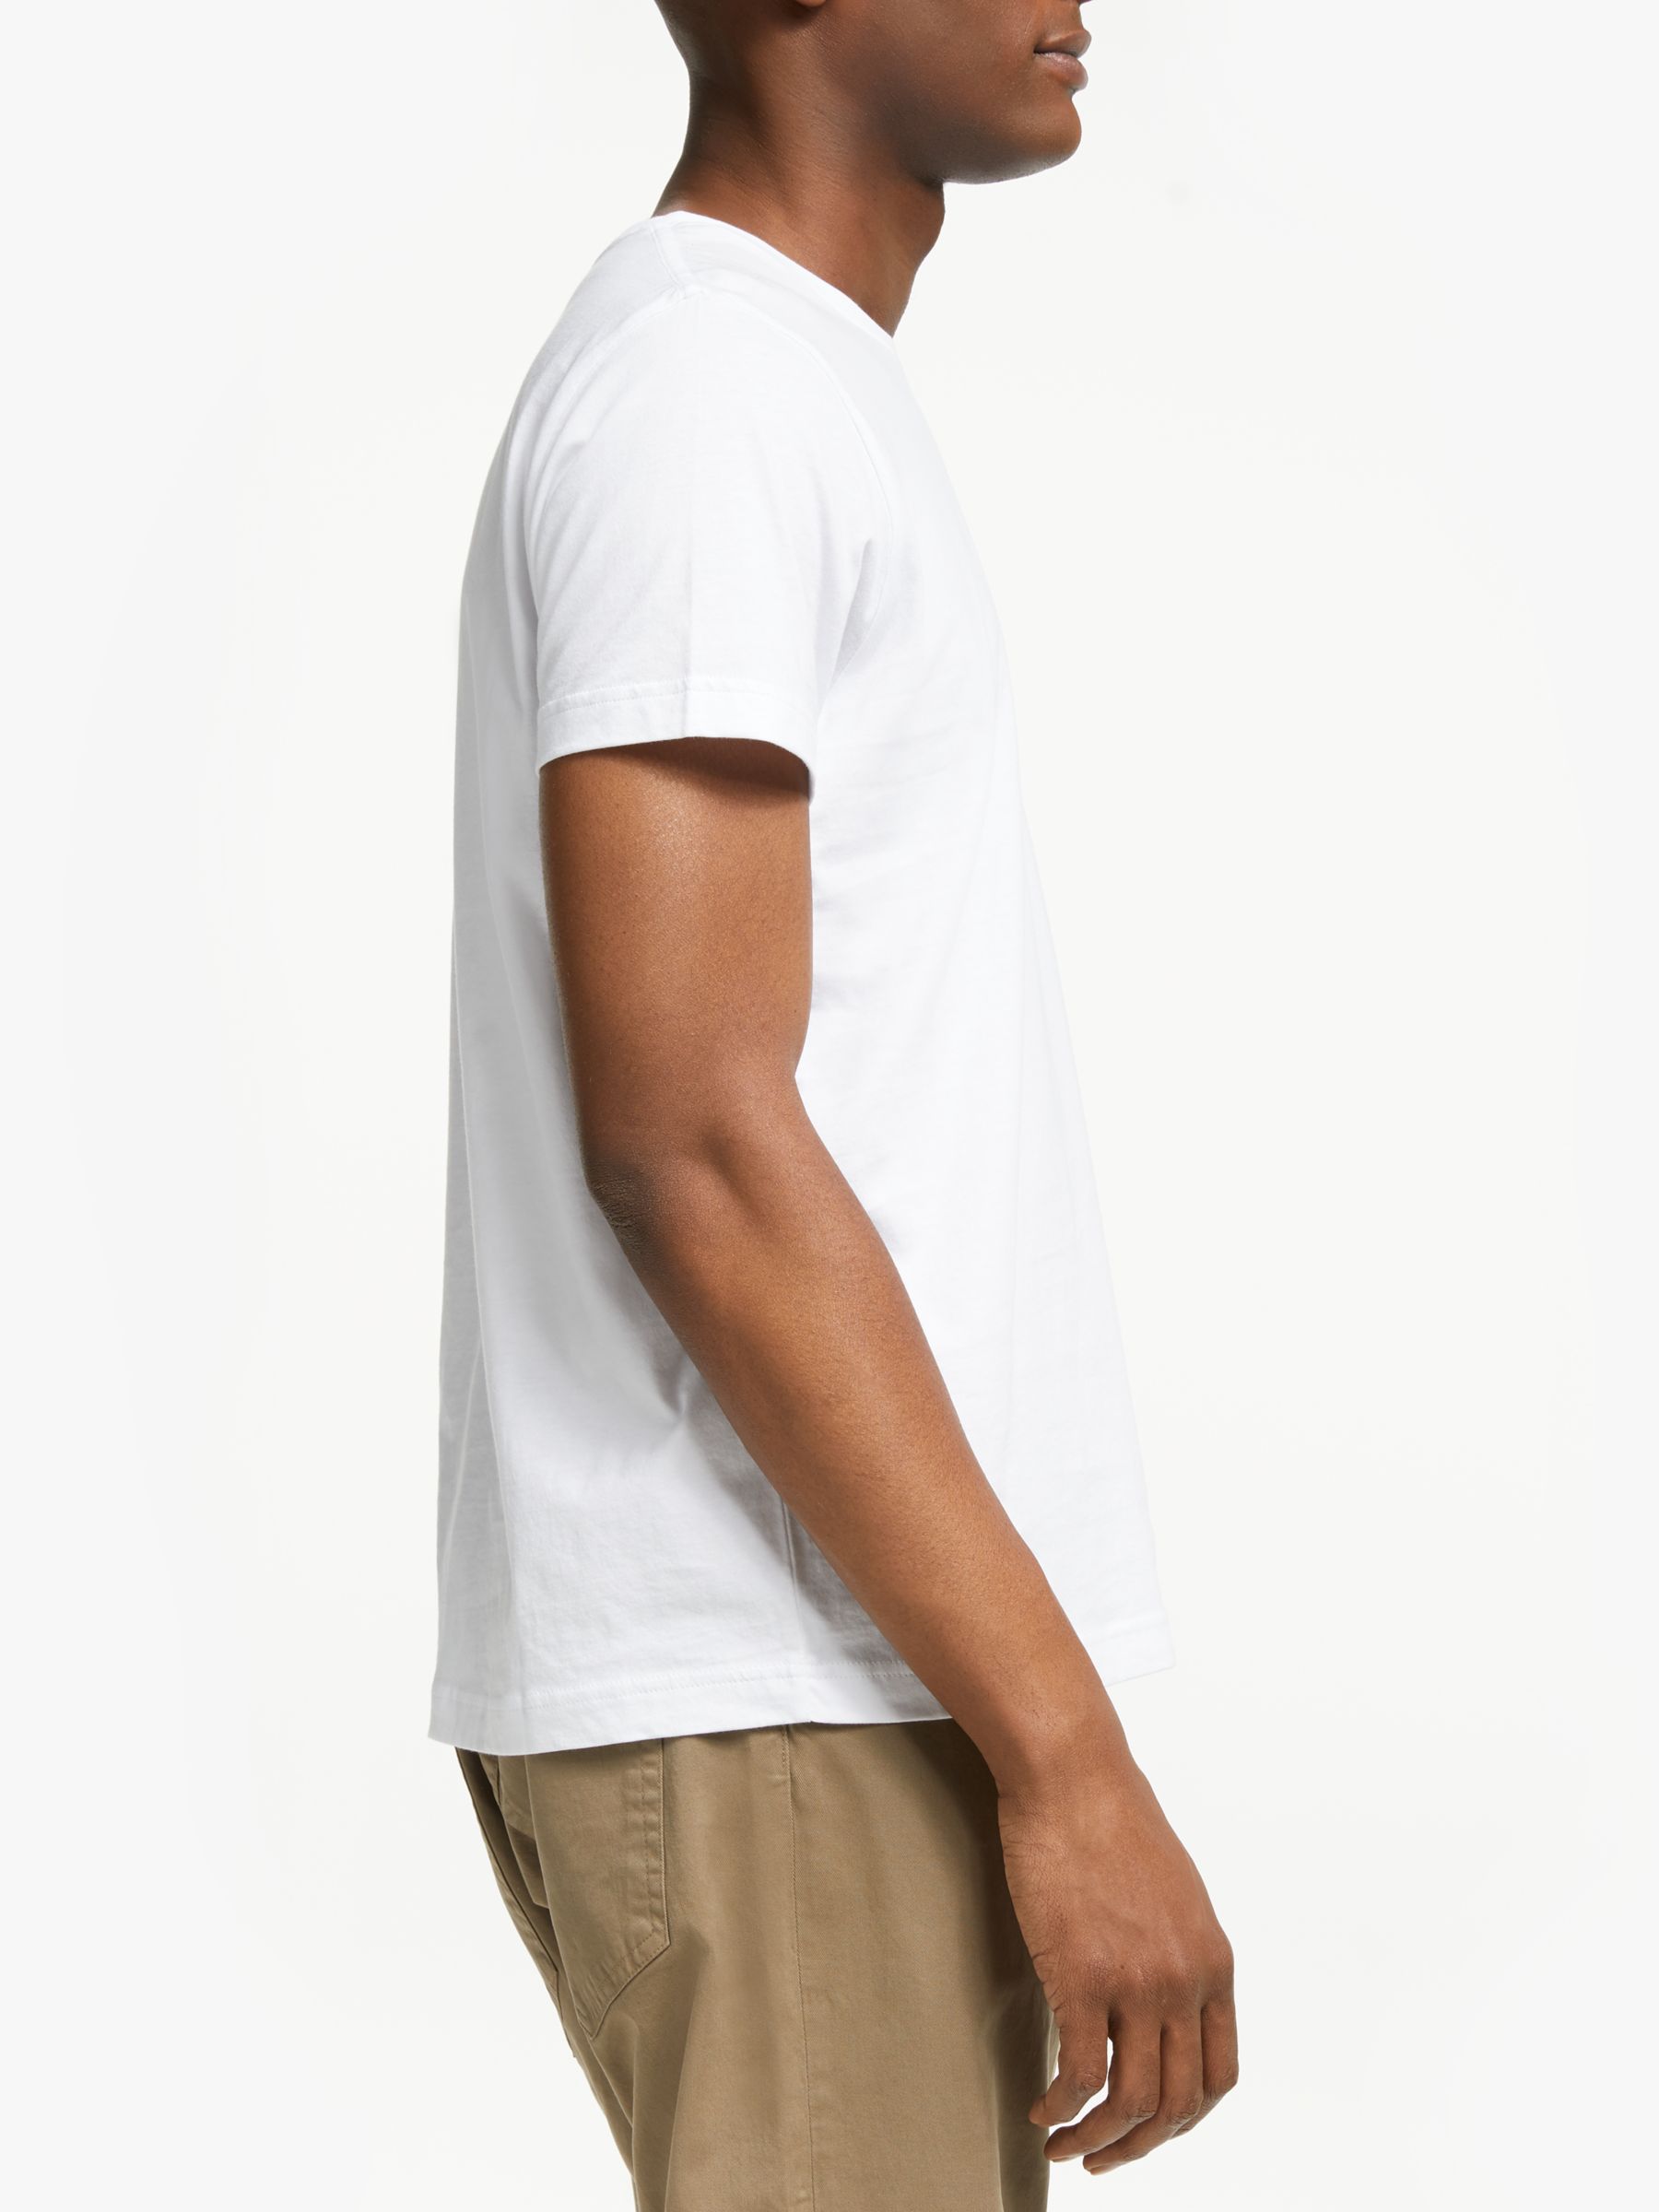 GANT Cotton Crew Neck T-Shirt, White at John Lewis & Partners